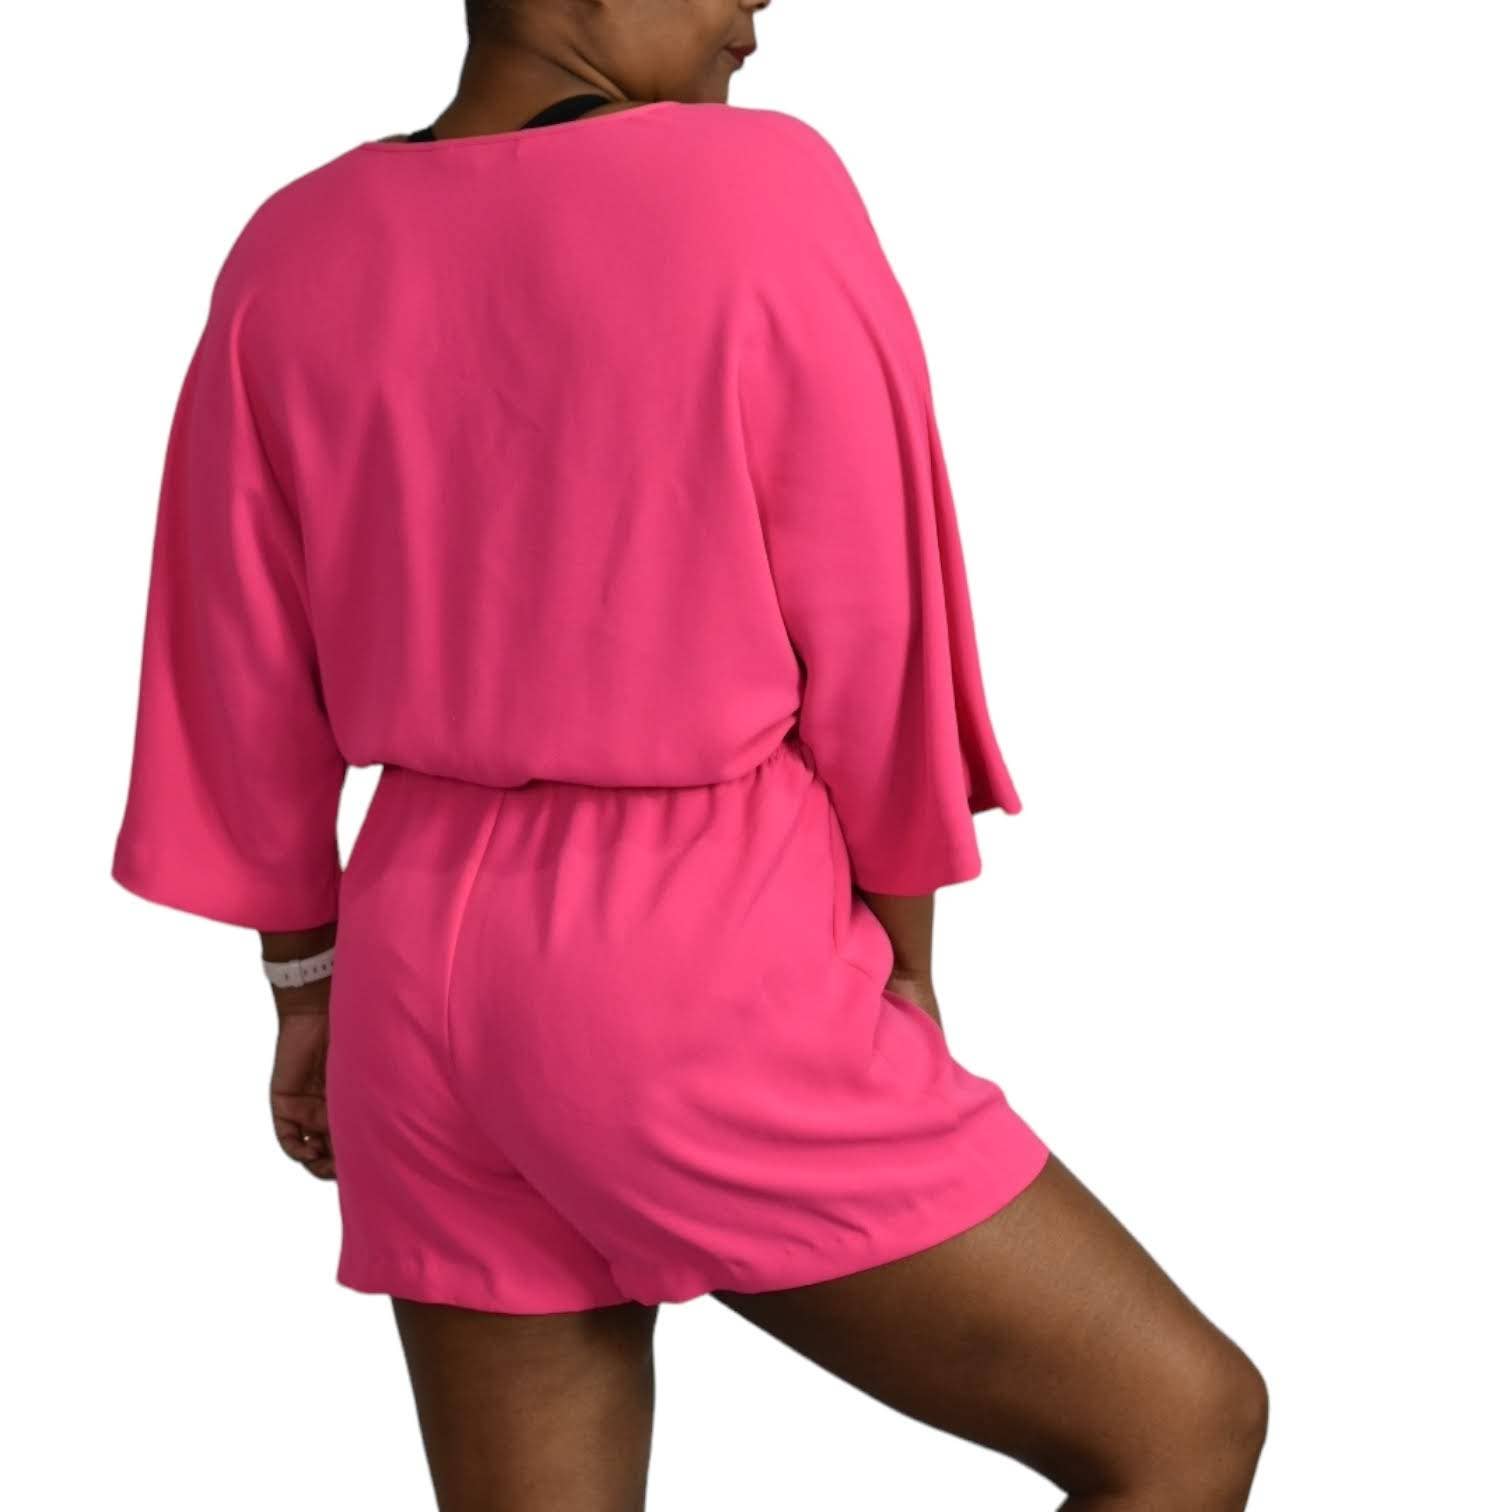 Trina Turk Tori Romper Hot Pink Playsuit Drawstring Shorts Blouson Travel Size Medium